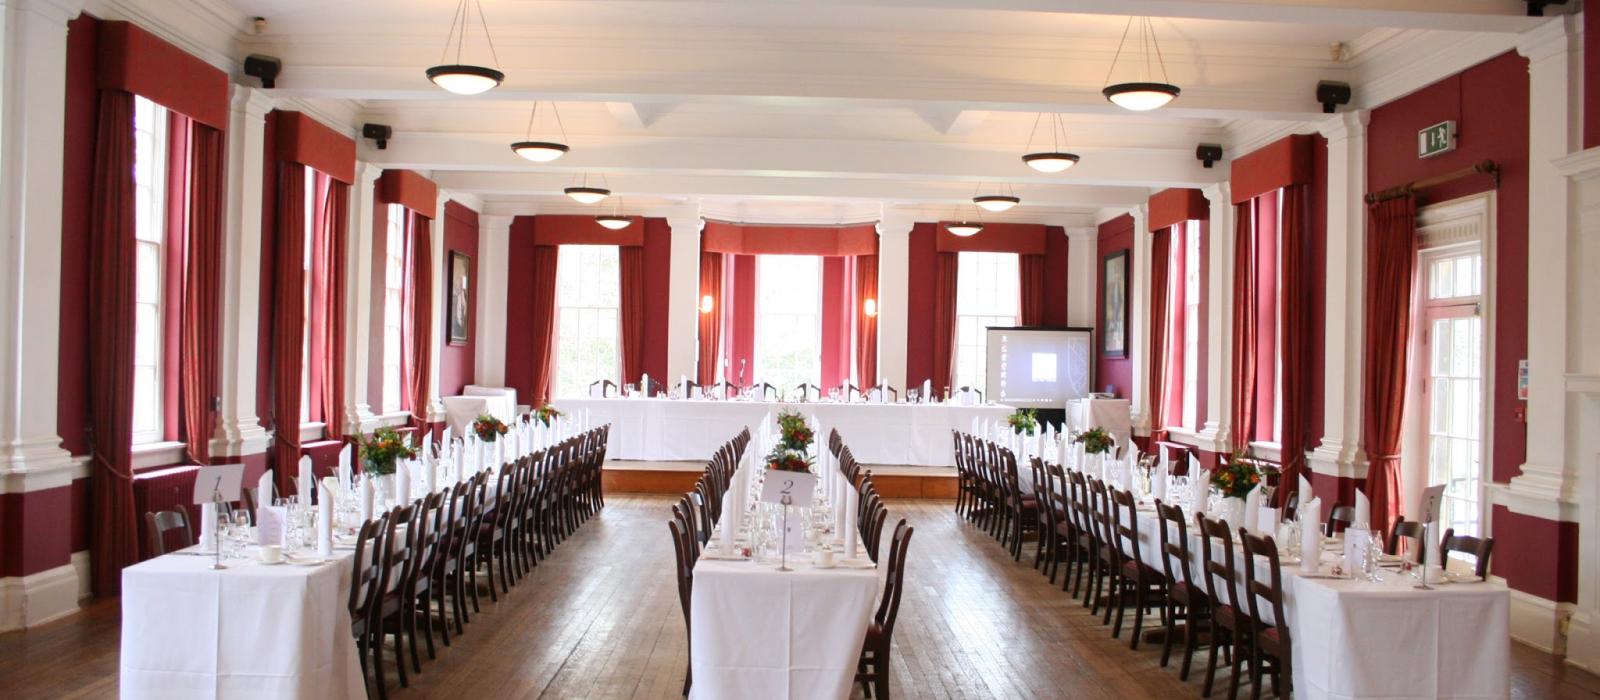 Dining Hall, St Hugh's College